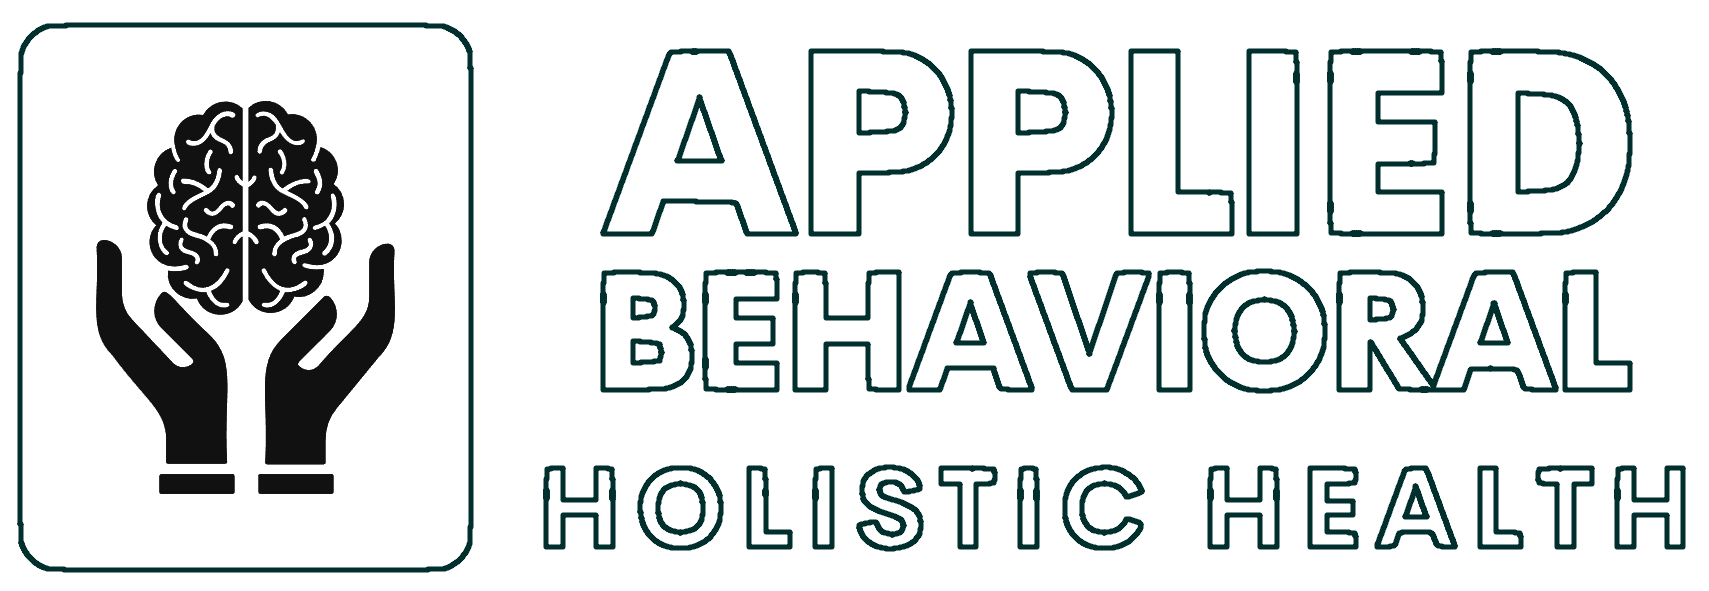 Applied Behavioral Holistic Health